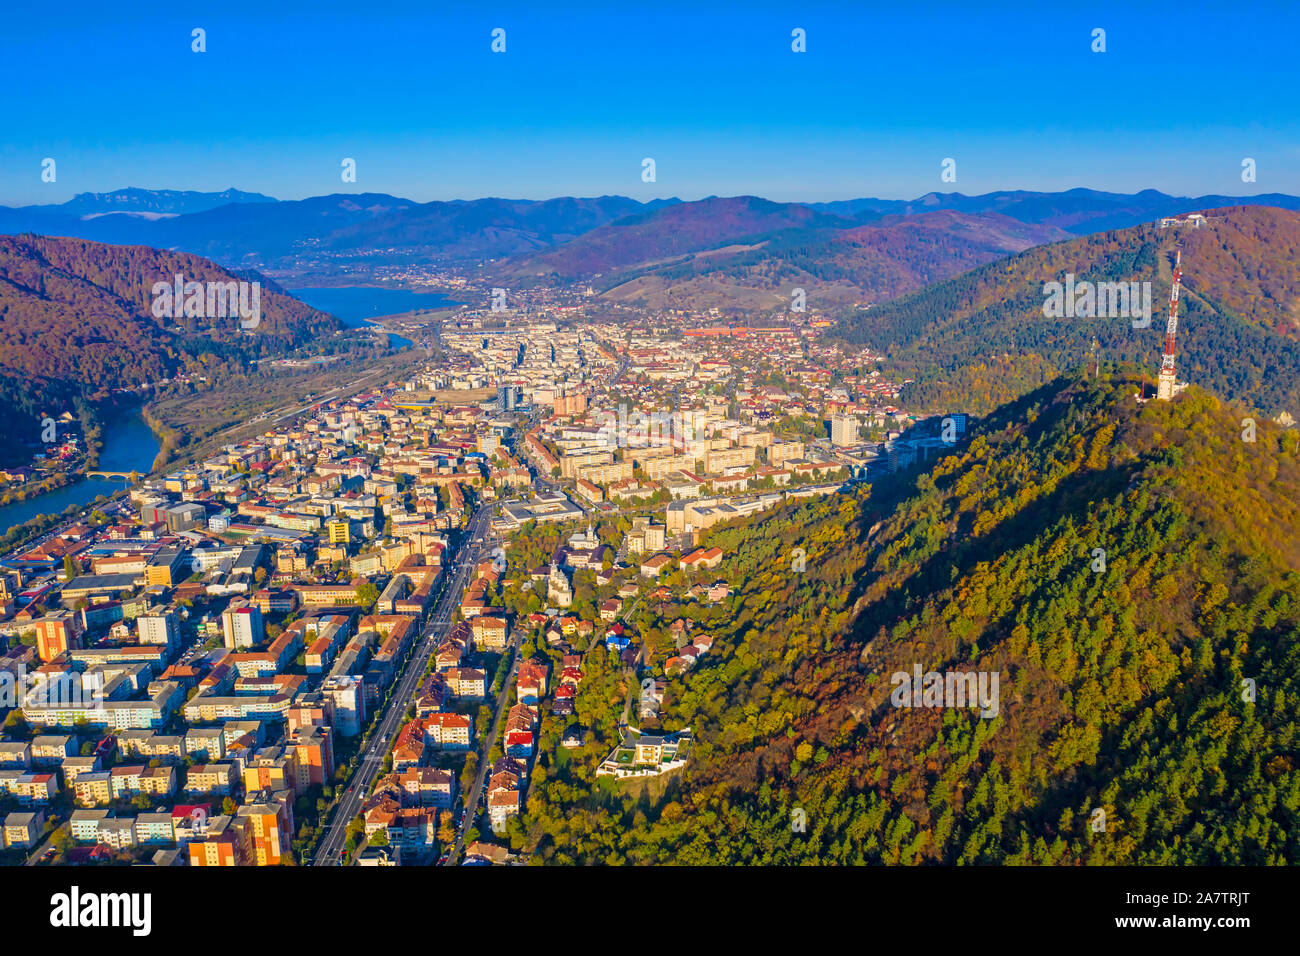 Aerial view of mountain city, autumn landscape at Piatra Neamt in Romania Stock Photo